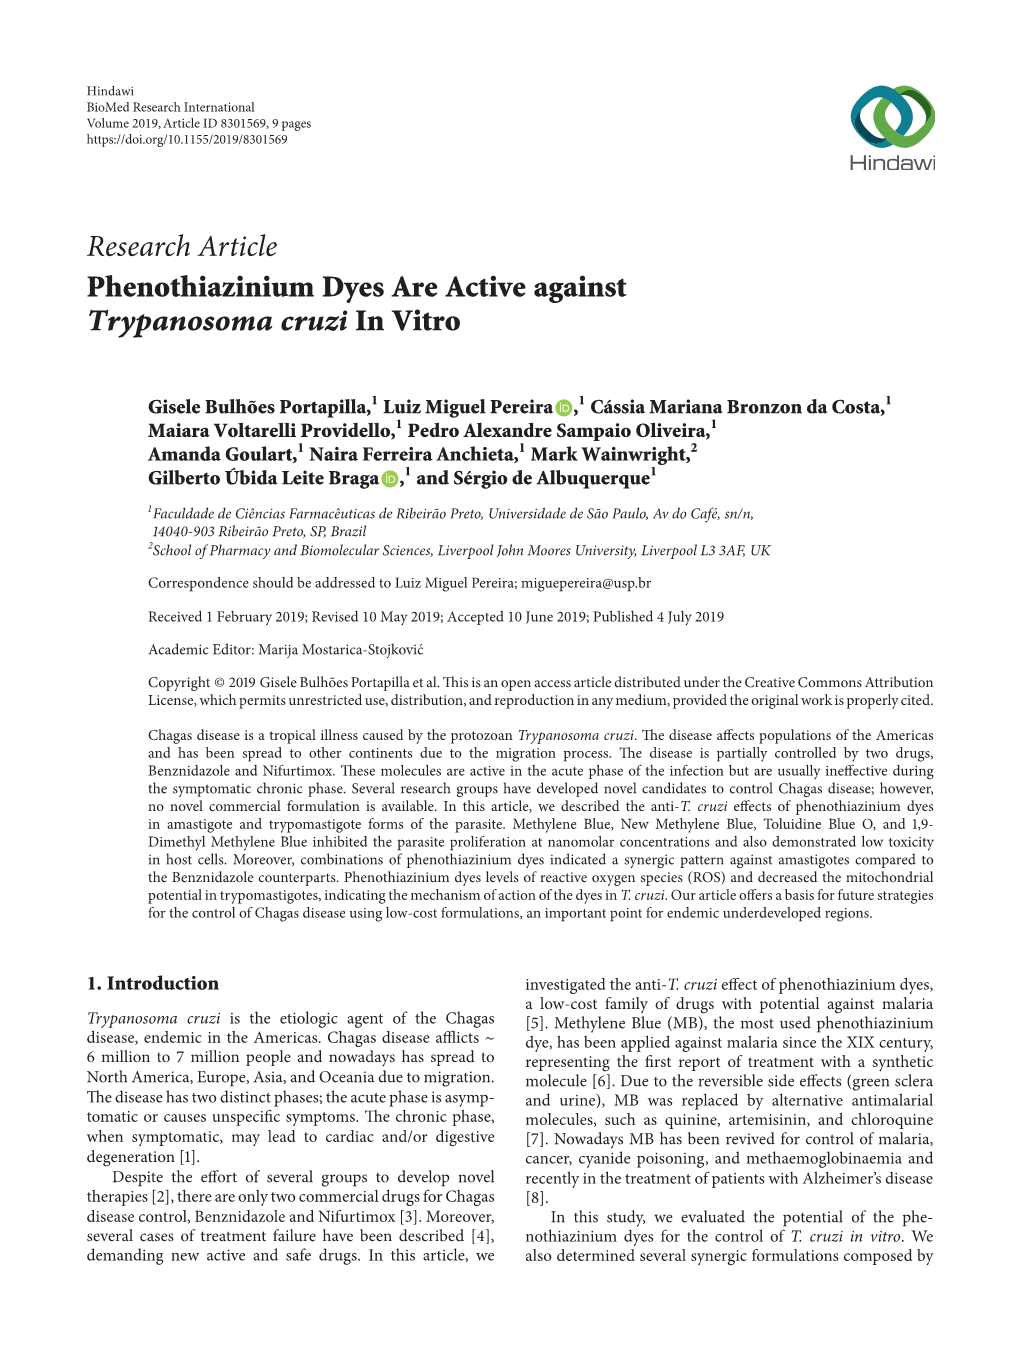 Phenothiazinium Dyes Are Active Against Trypanosoma Cruzi in Vitro